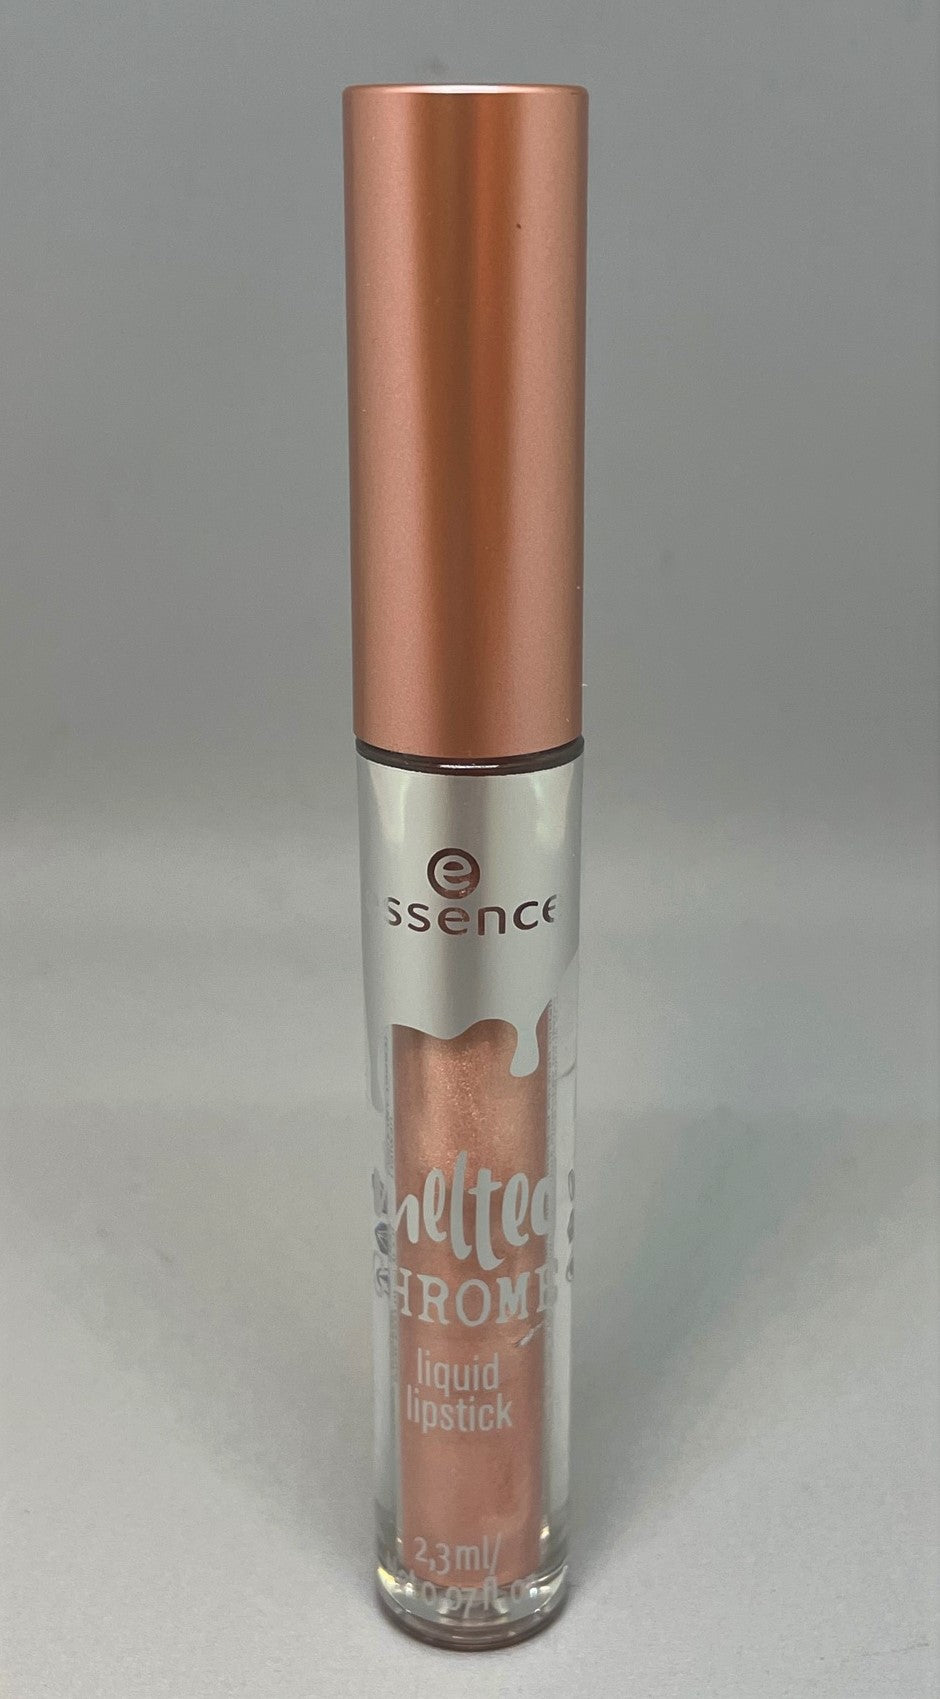 Essence Melted Chrome Liquid Lipstick - 2.3 mL - 01 Sweet Tin - New